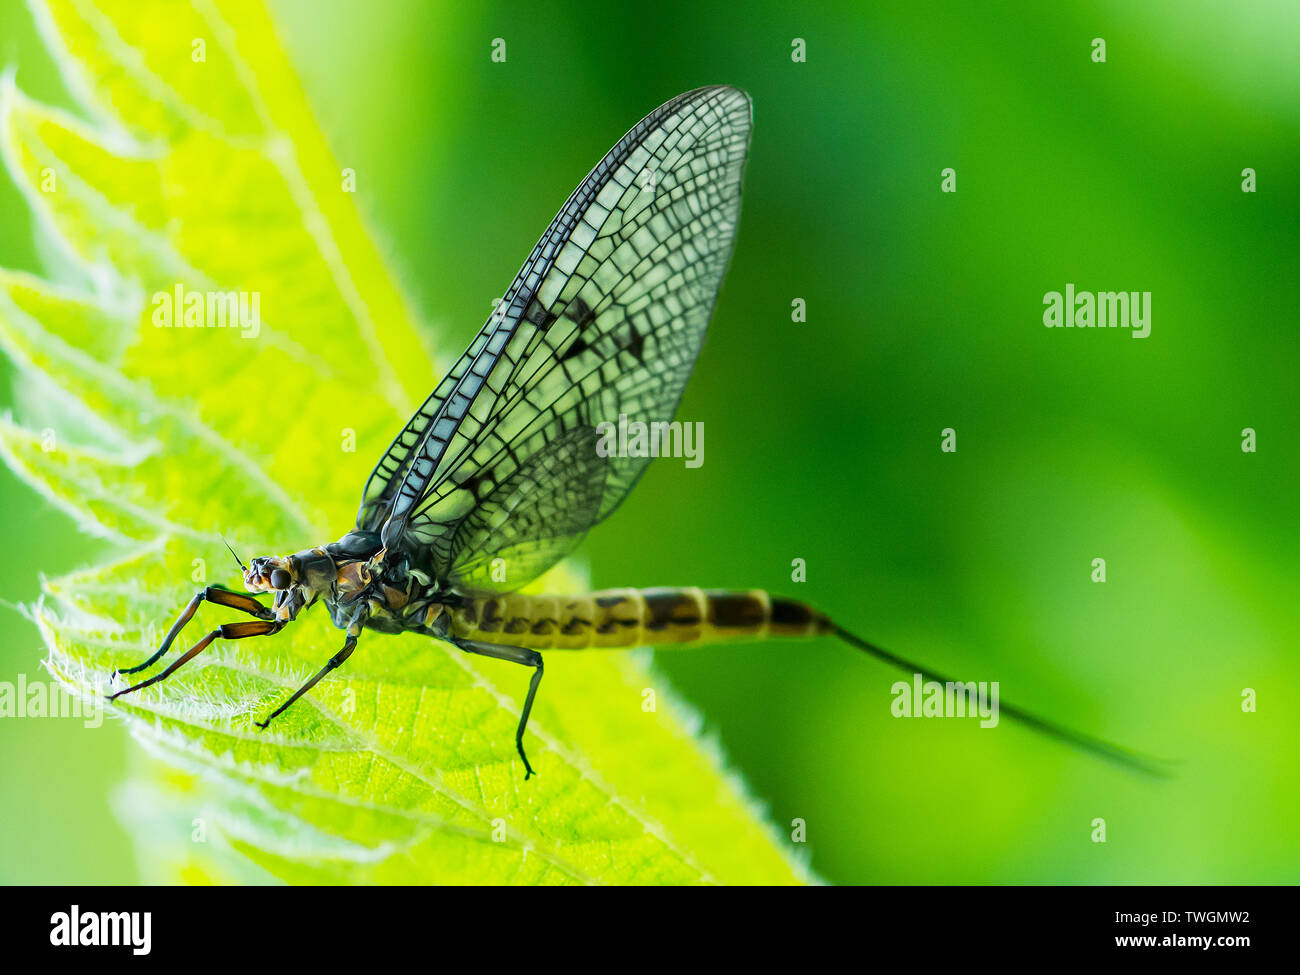 Adult Mayfly close up on nettle leaf Stock Photo